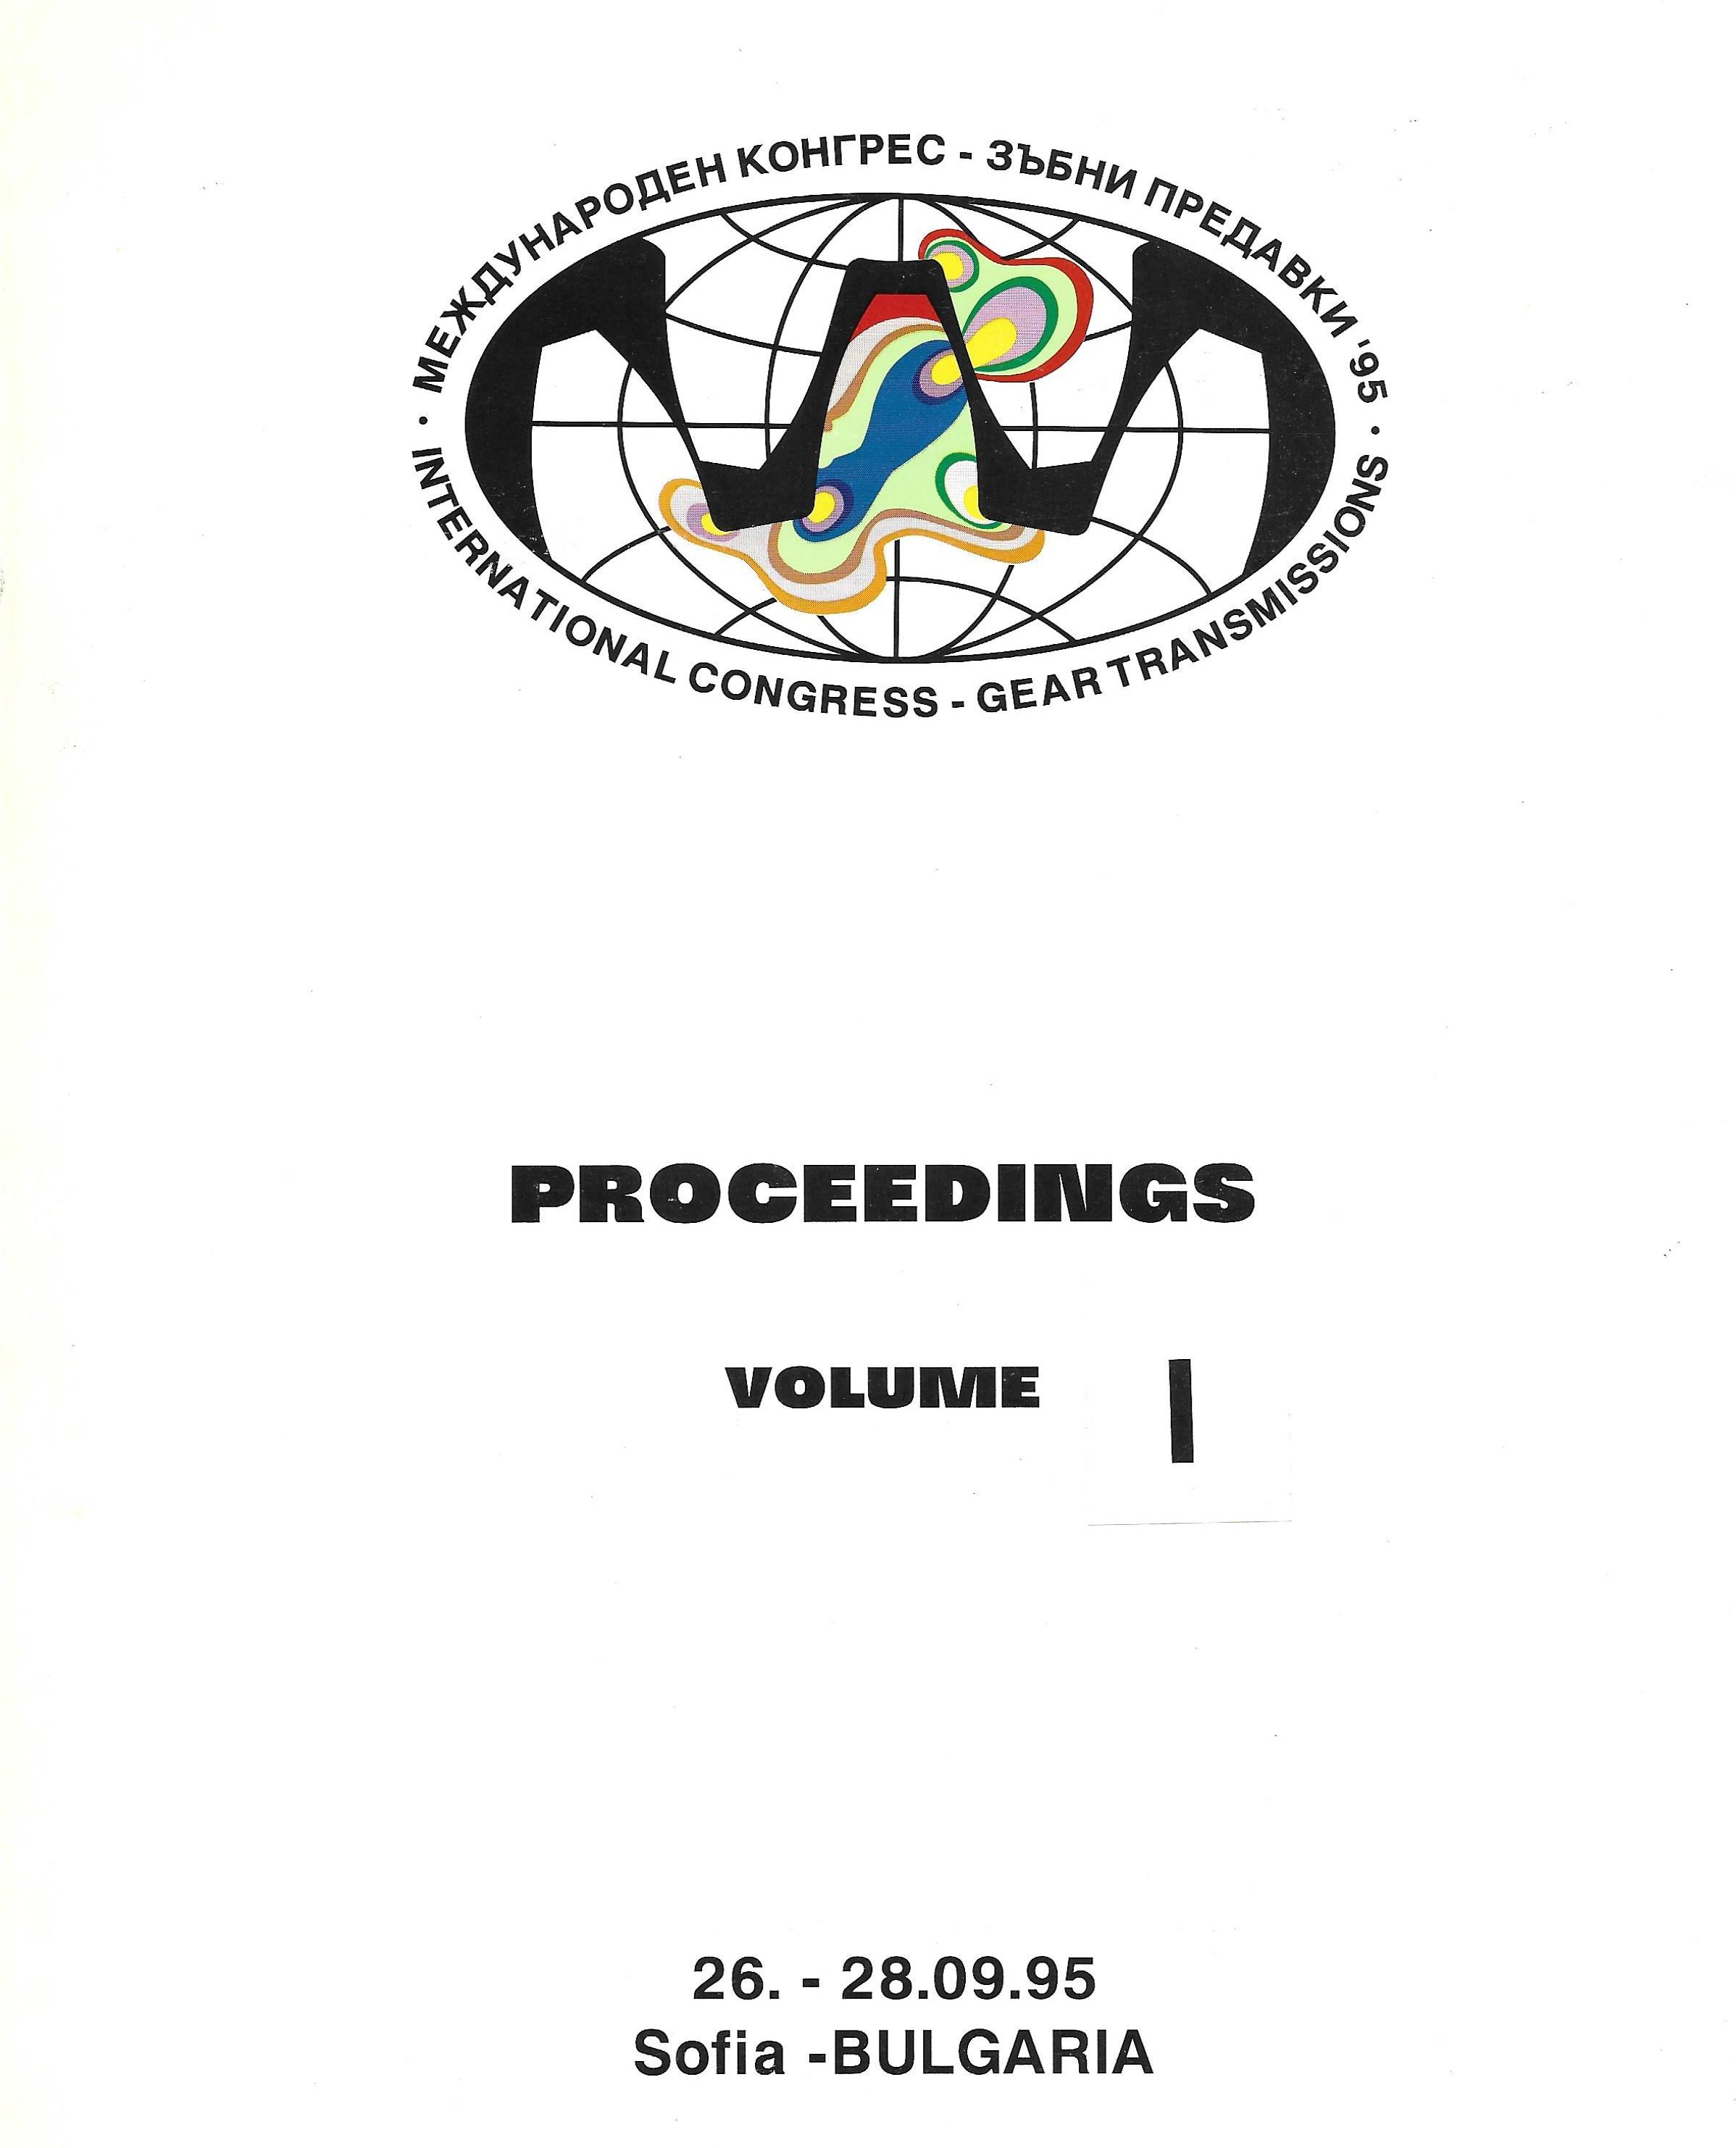 International Congress - Gear Transmissions 95